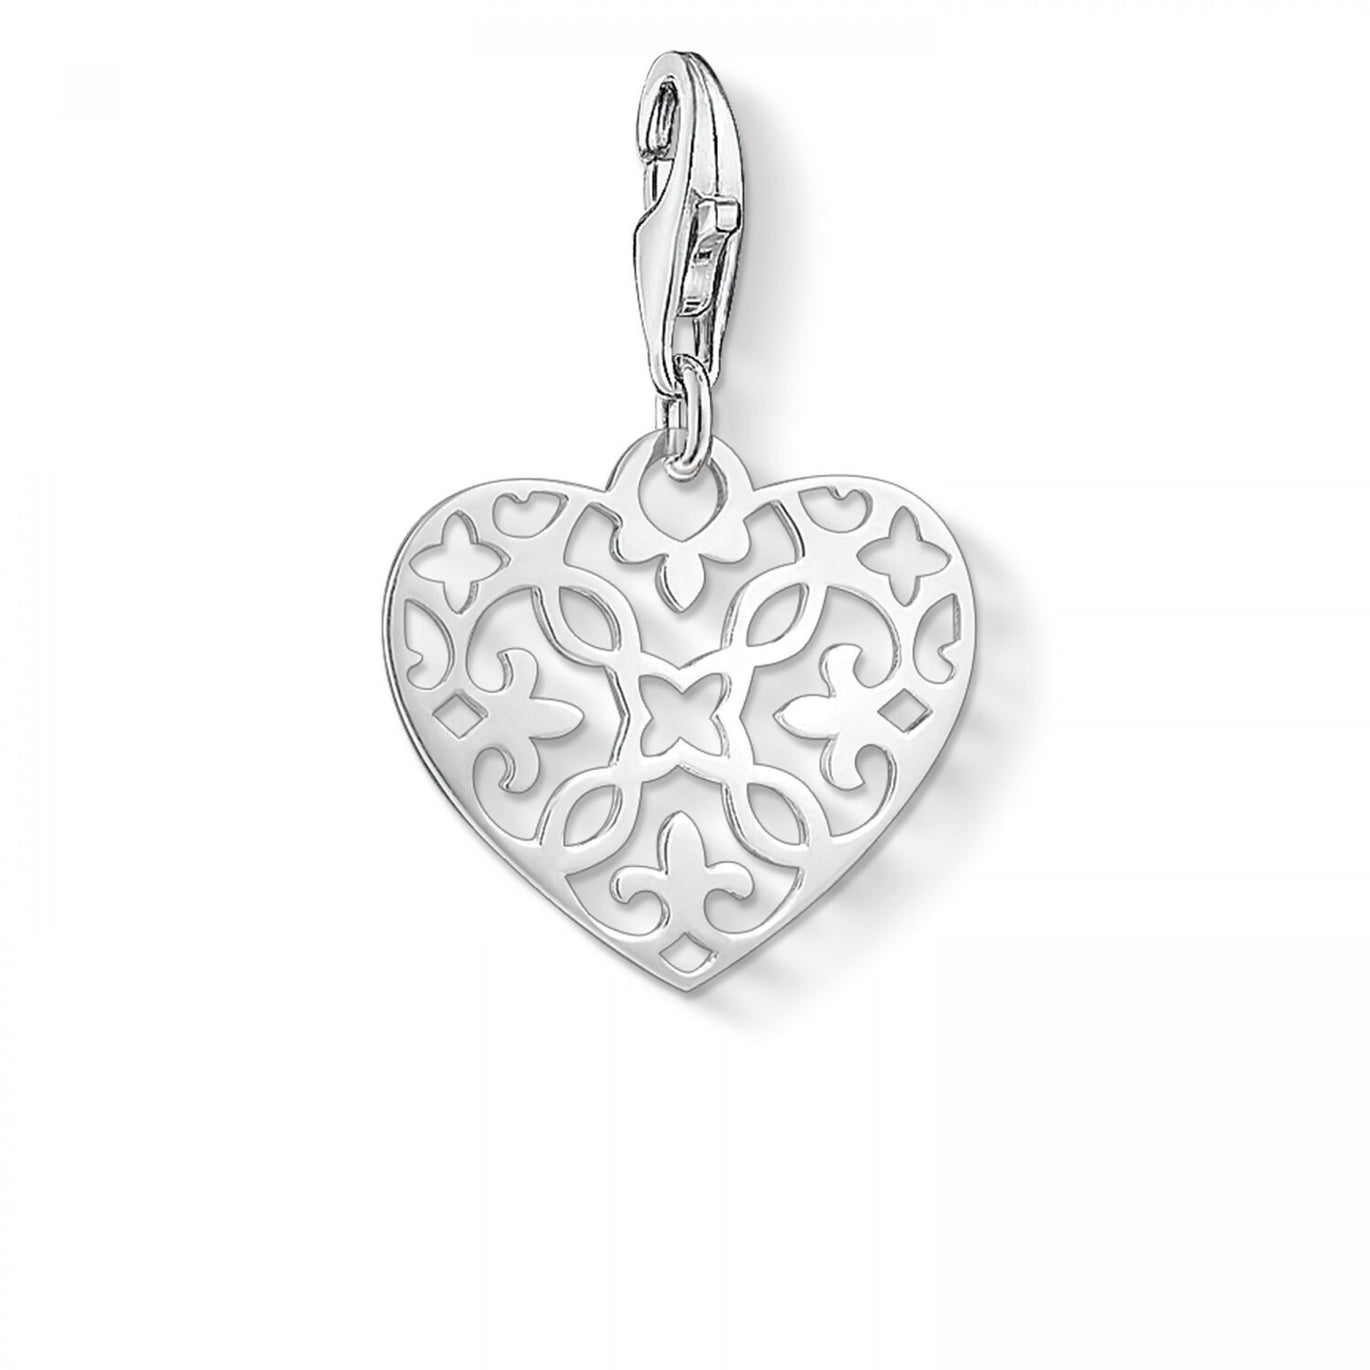 Thomas Sabo Ornament Heart Charm